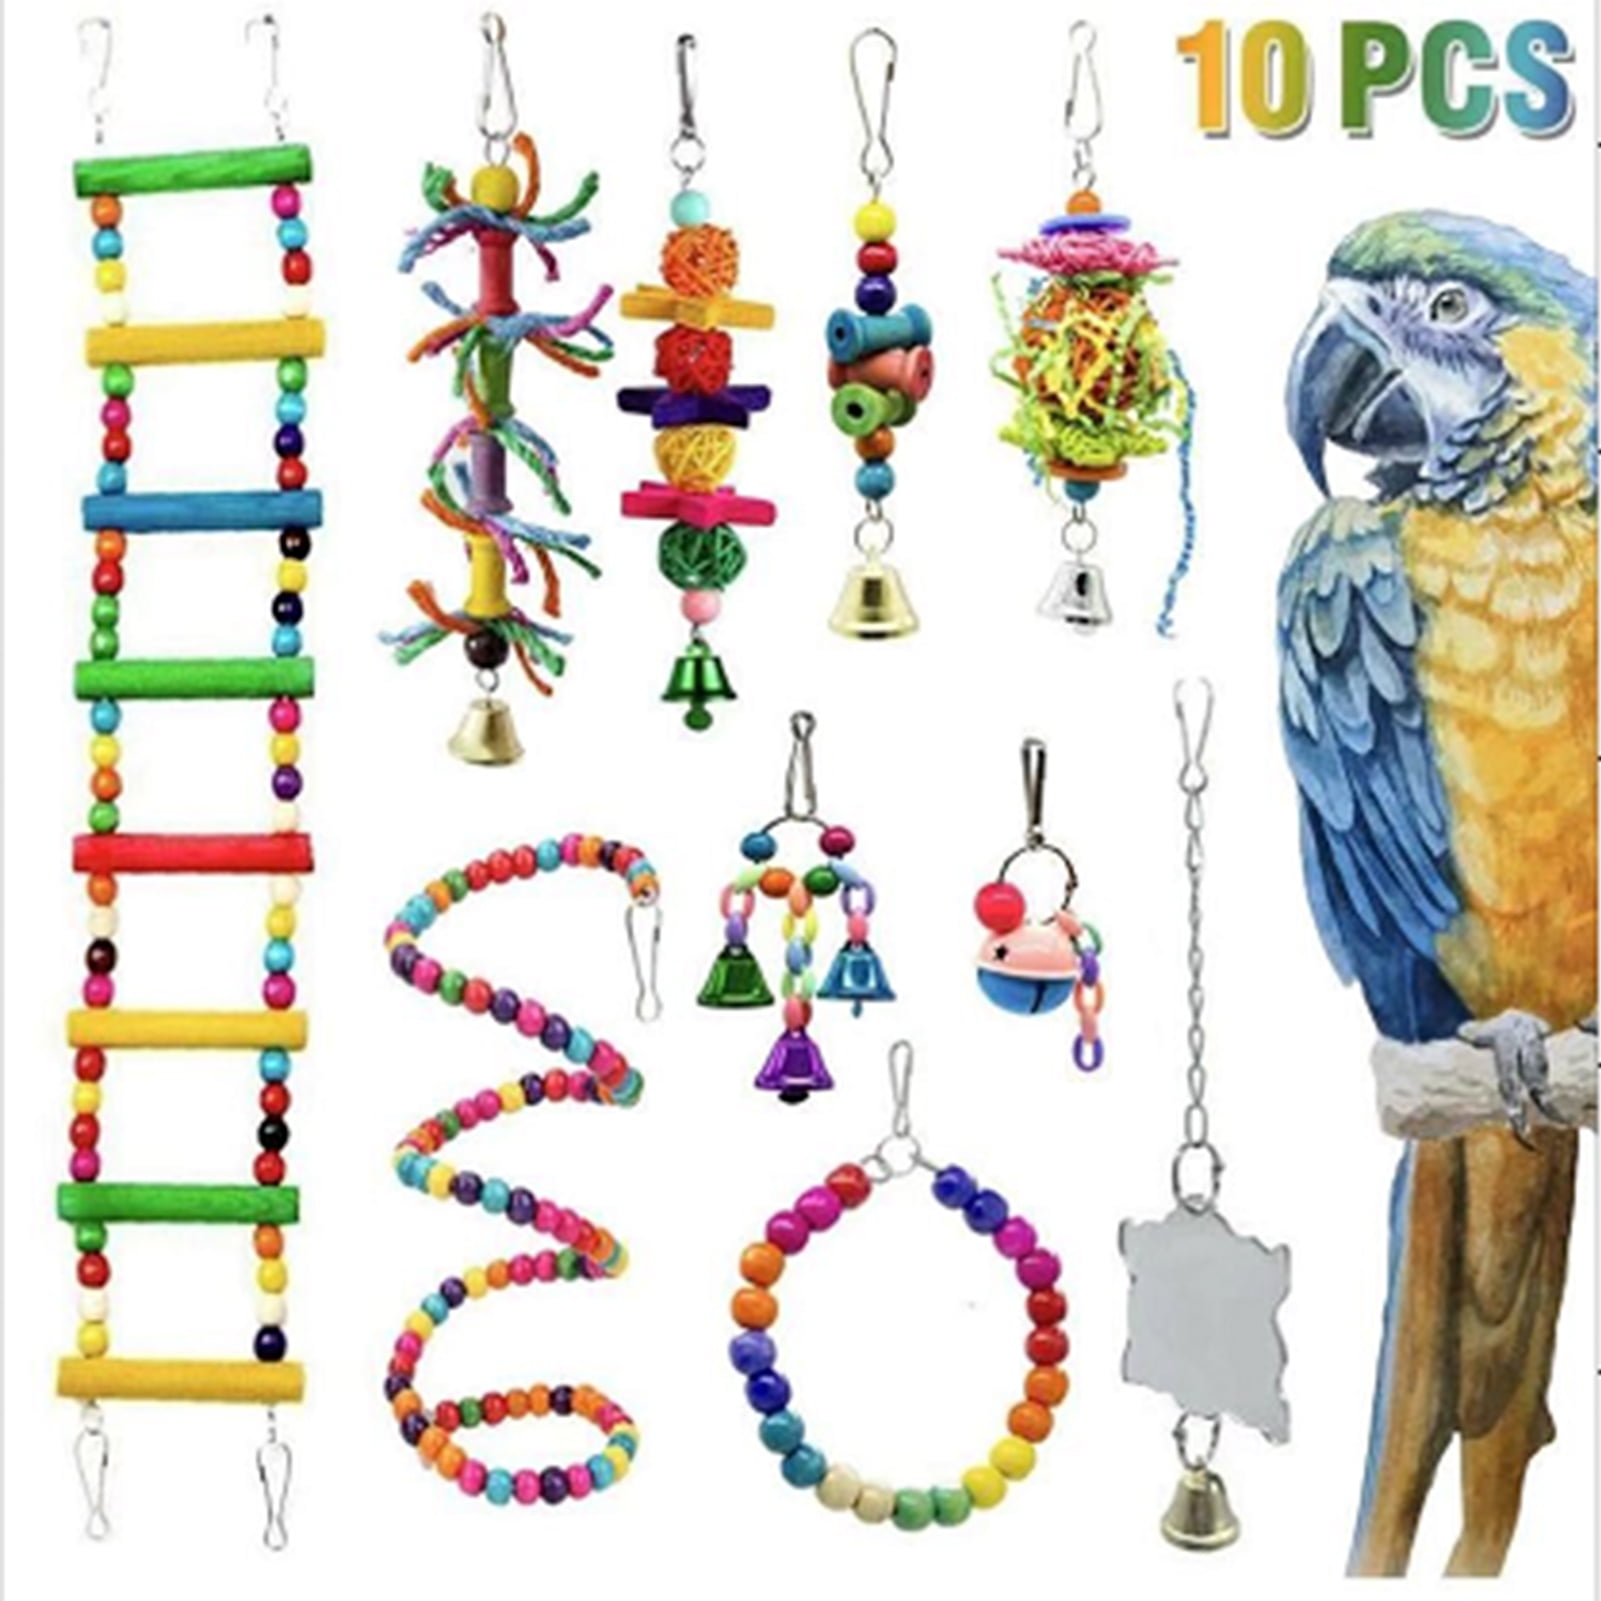 Pet Bird Parrot Parakeet Budgie Cockatiel Cage Bell Swing Chew Hanging Toys LD 